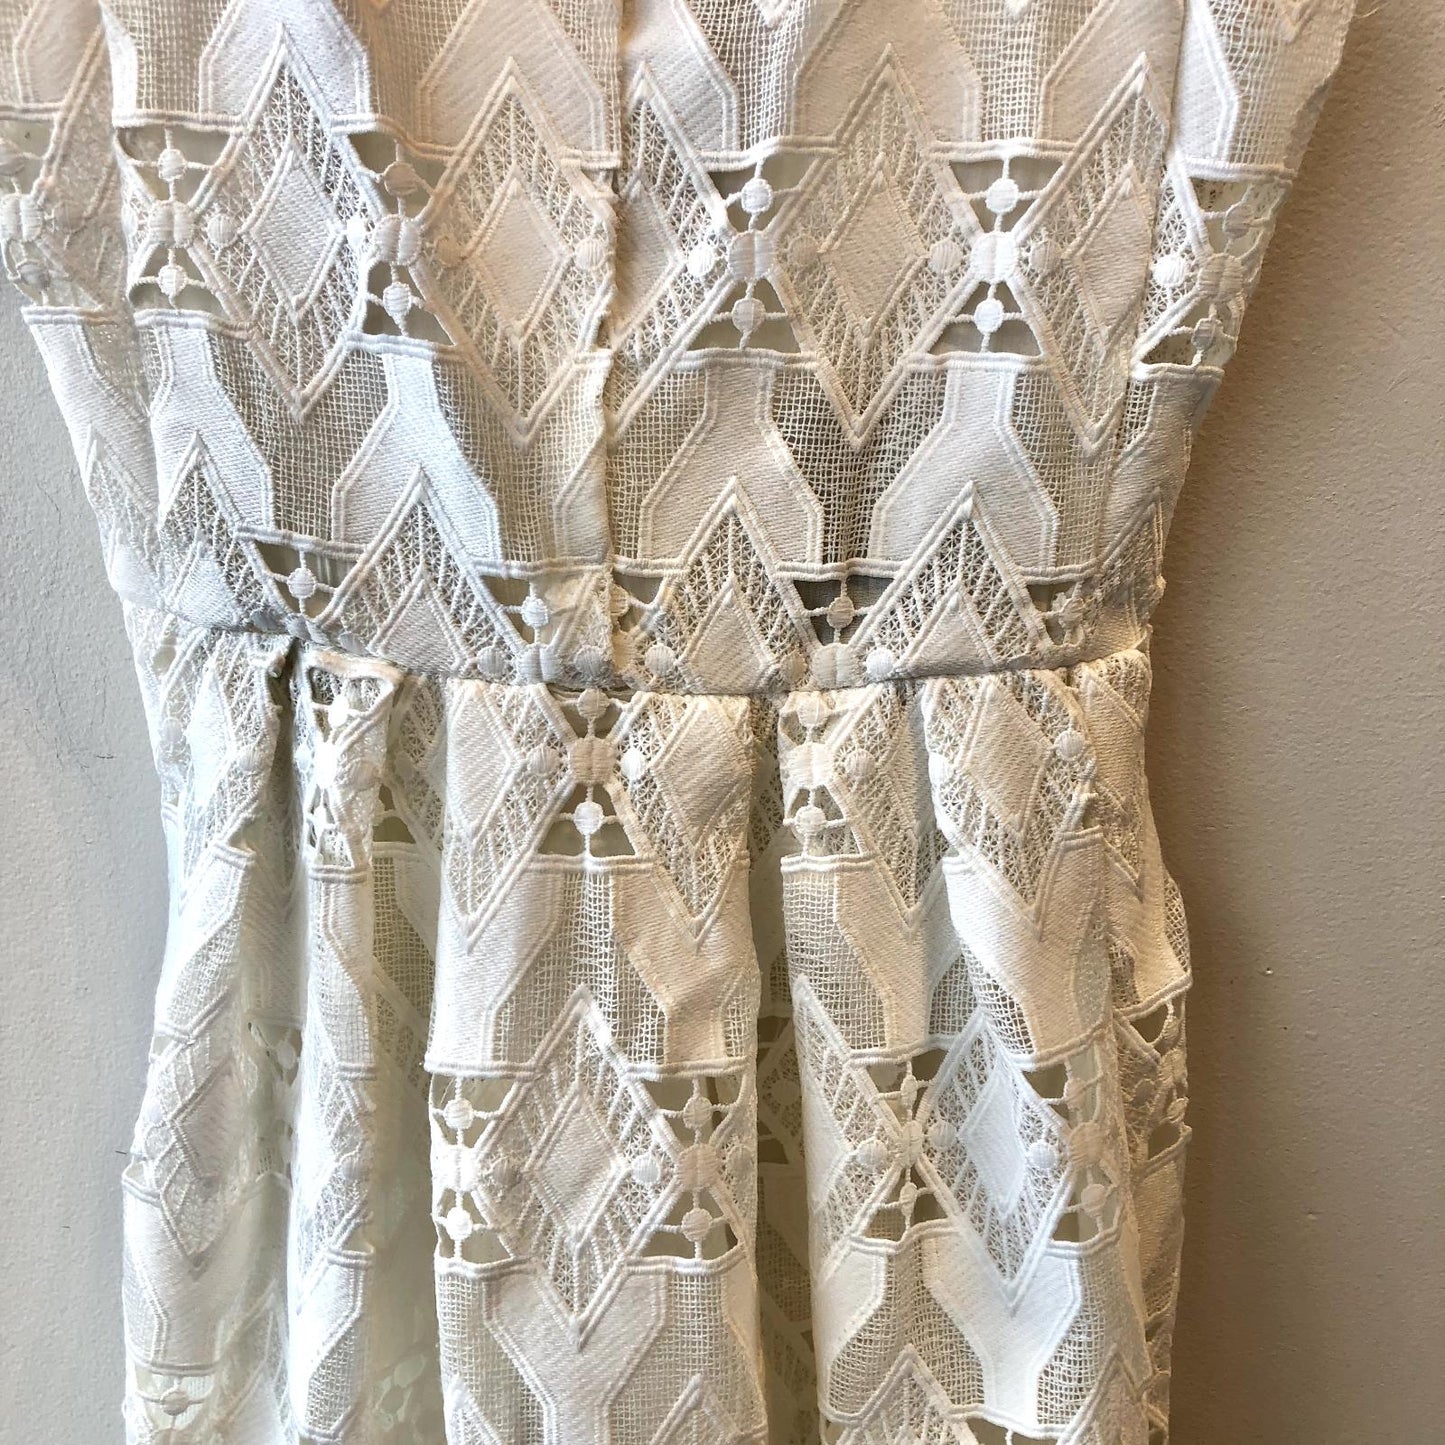 1 / S - Maje White Lace Sleeveless Midi Length Pleated Dress 0202WJ